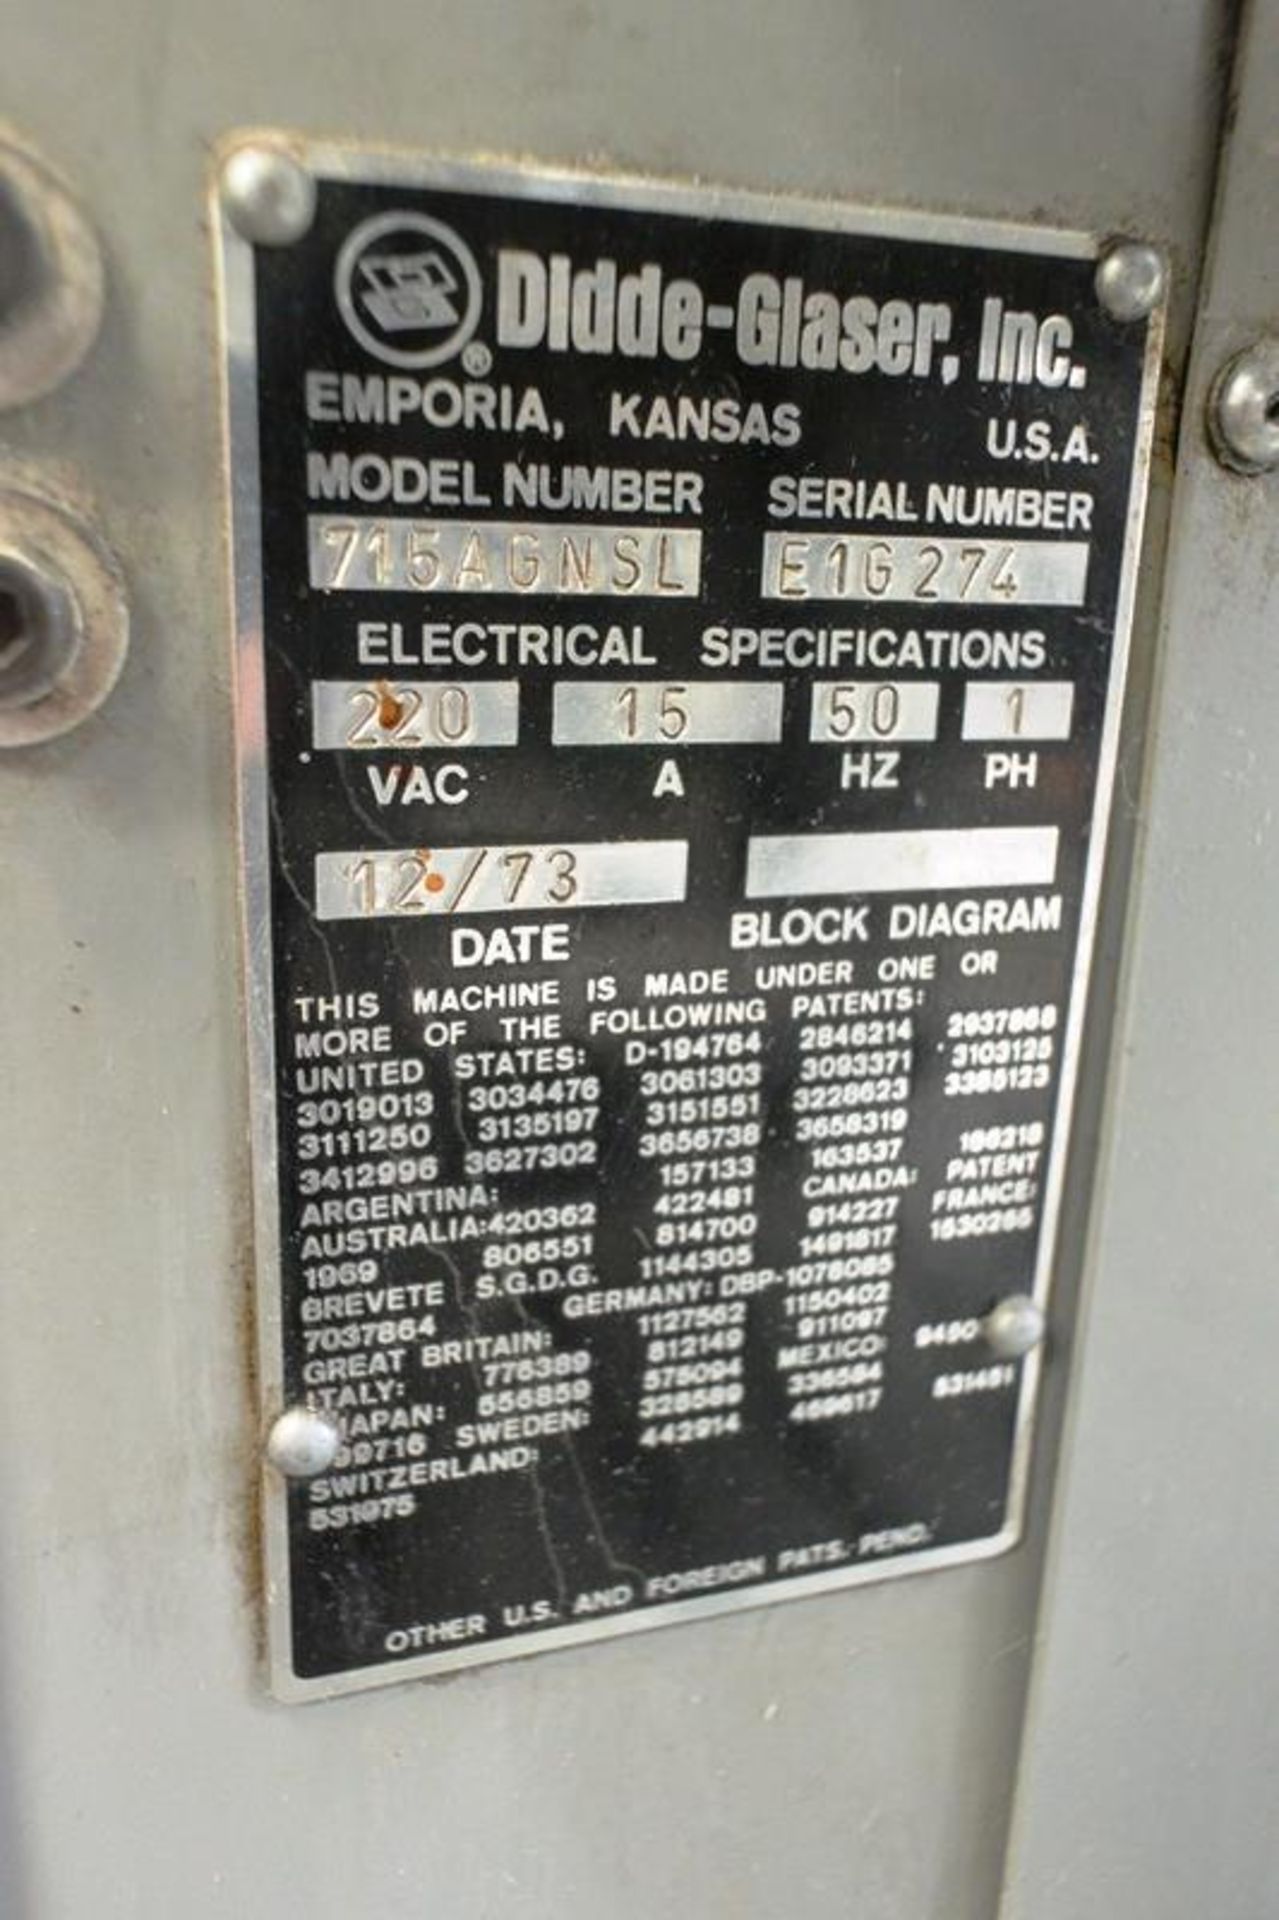 Didde-Glasser Speed-Klect 7 station collator machine, model no. 715AGN5L, serial no. EIG274, - Image 11 of 11